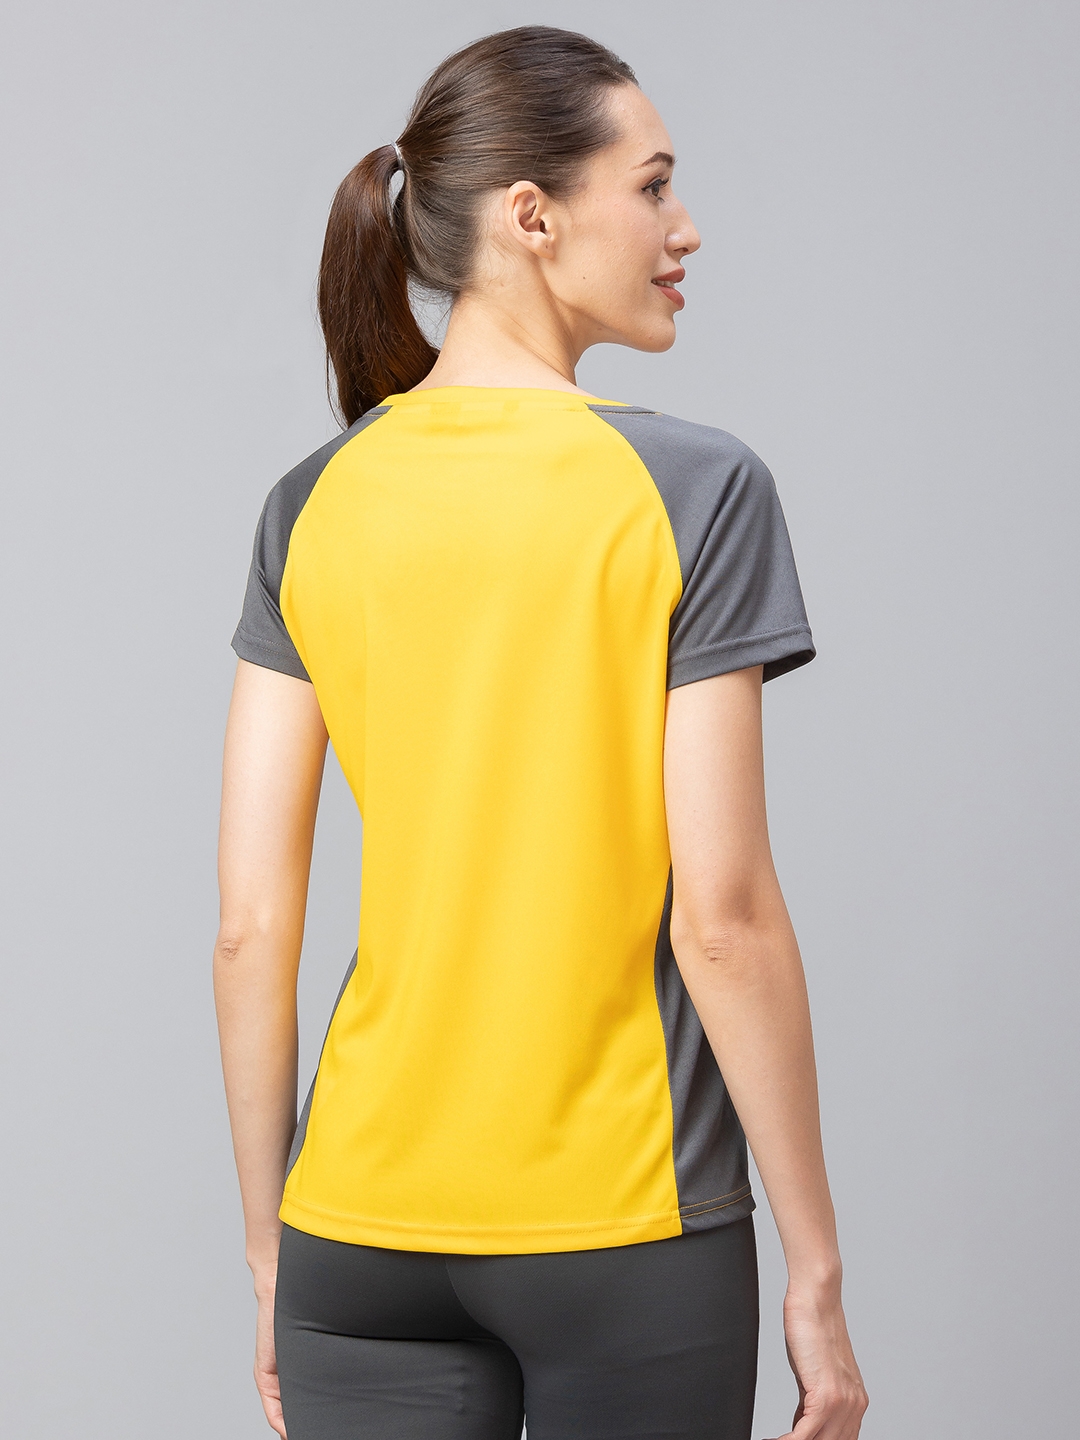 globus | Globus Yellow Colourblocked Tshirt 2